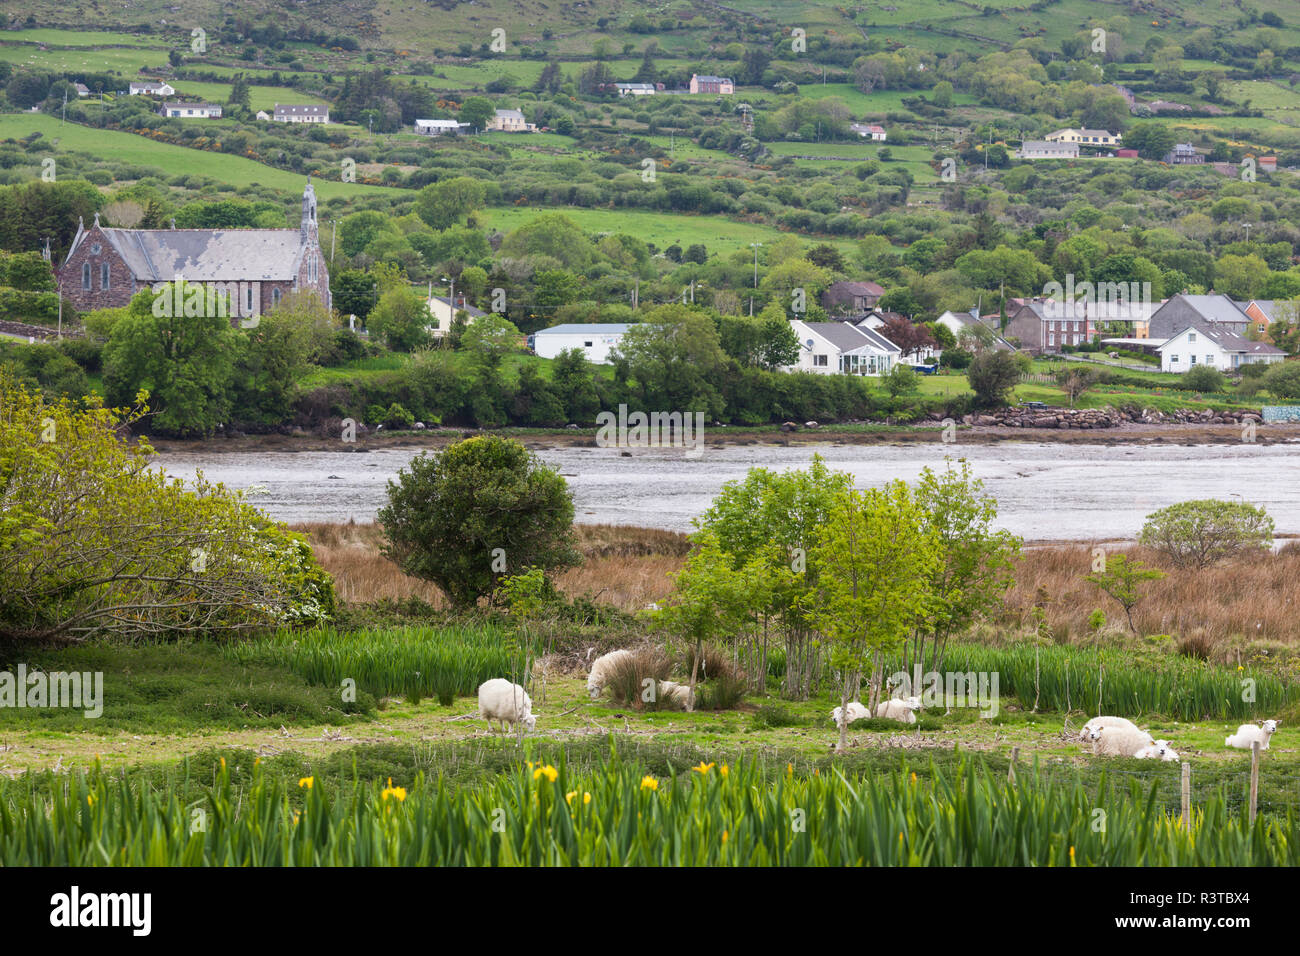 Ireland, County Kerry, Dingle Peninsula, Cloghane, village view Stock Photo